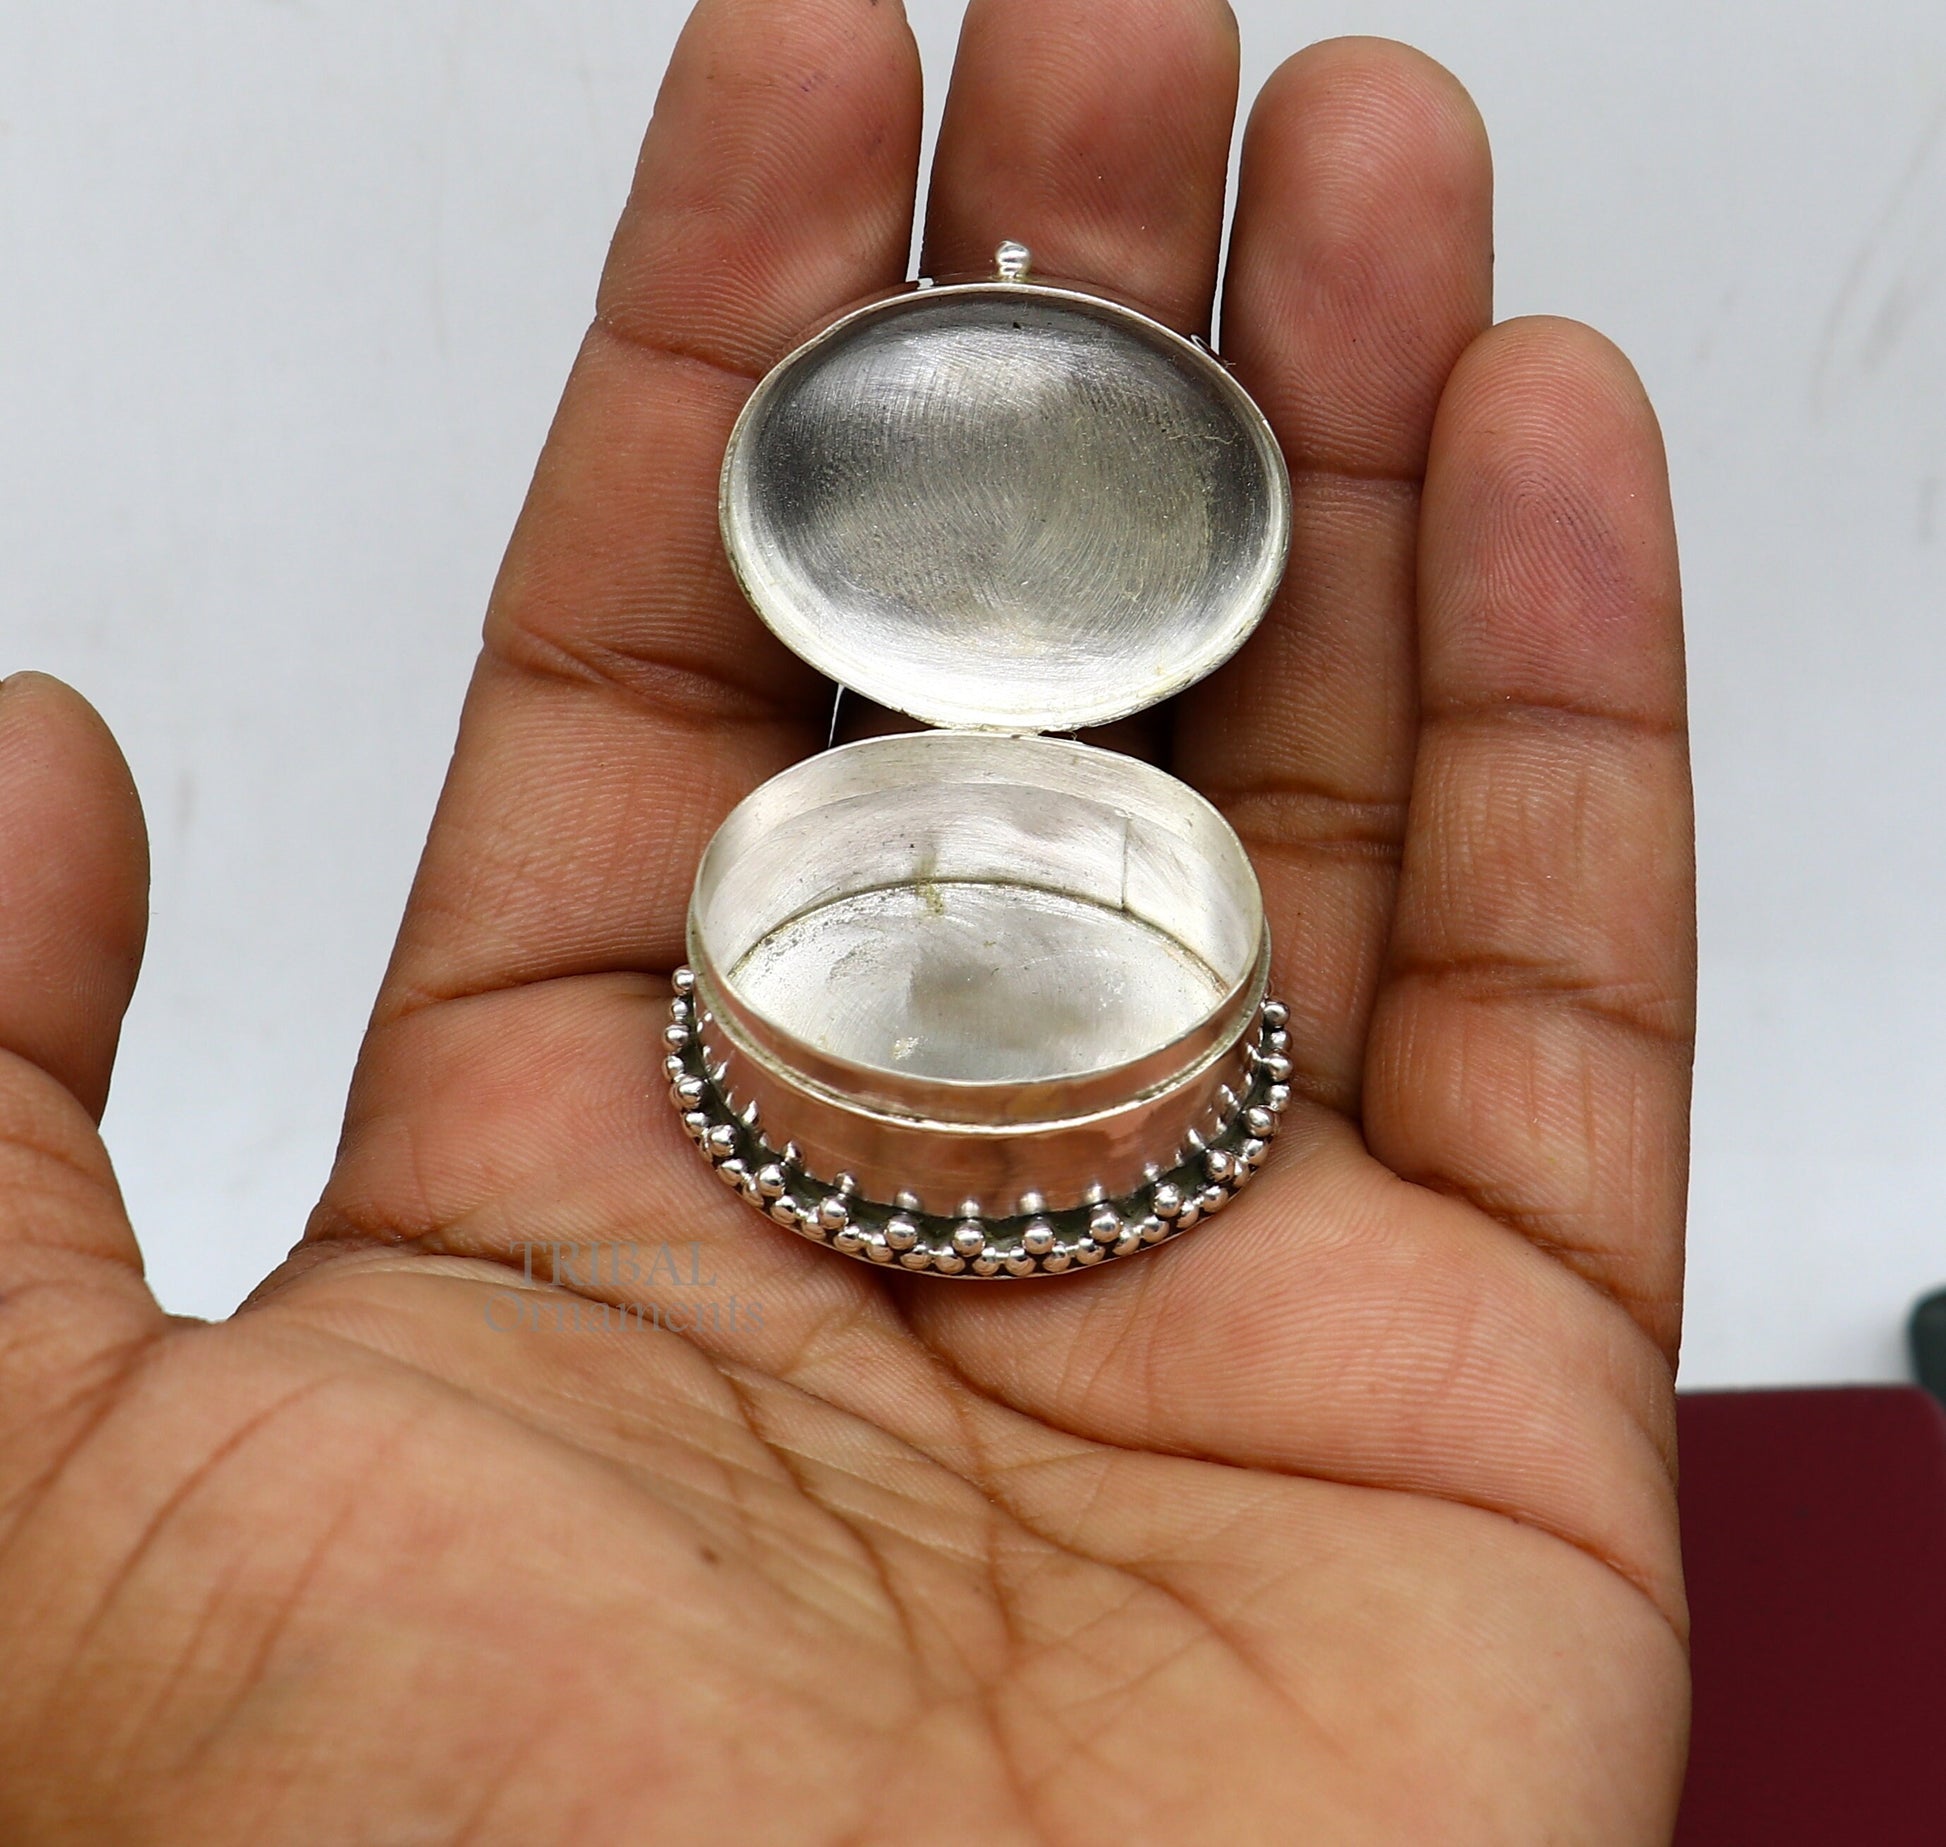 925 sterling silver handcrafted oval shape design stone work trinket box, kajal eyeliner box, Sindur box brides gift silver box stb759 - TRIBAL ORNAMENTS